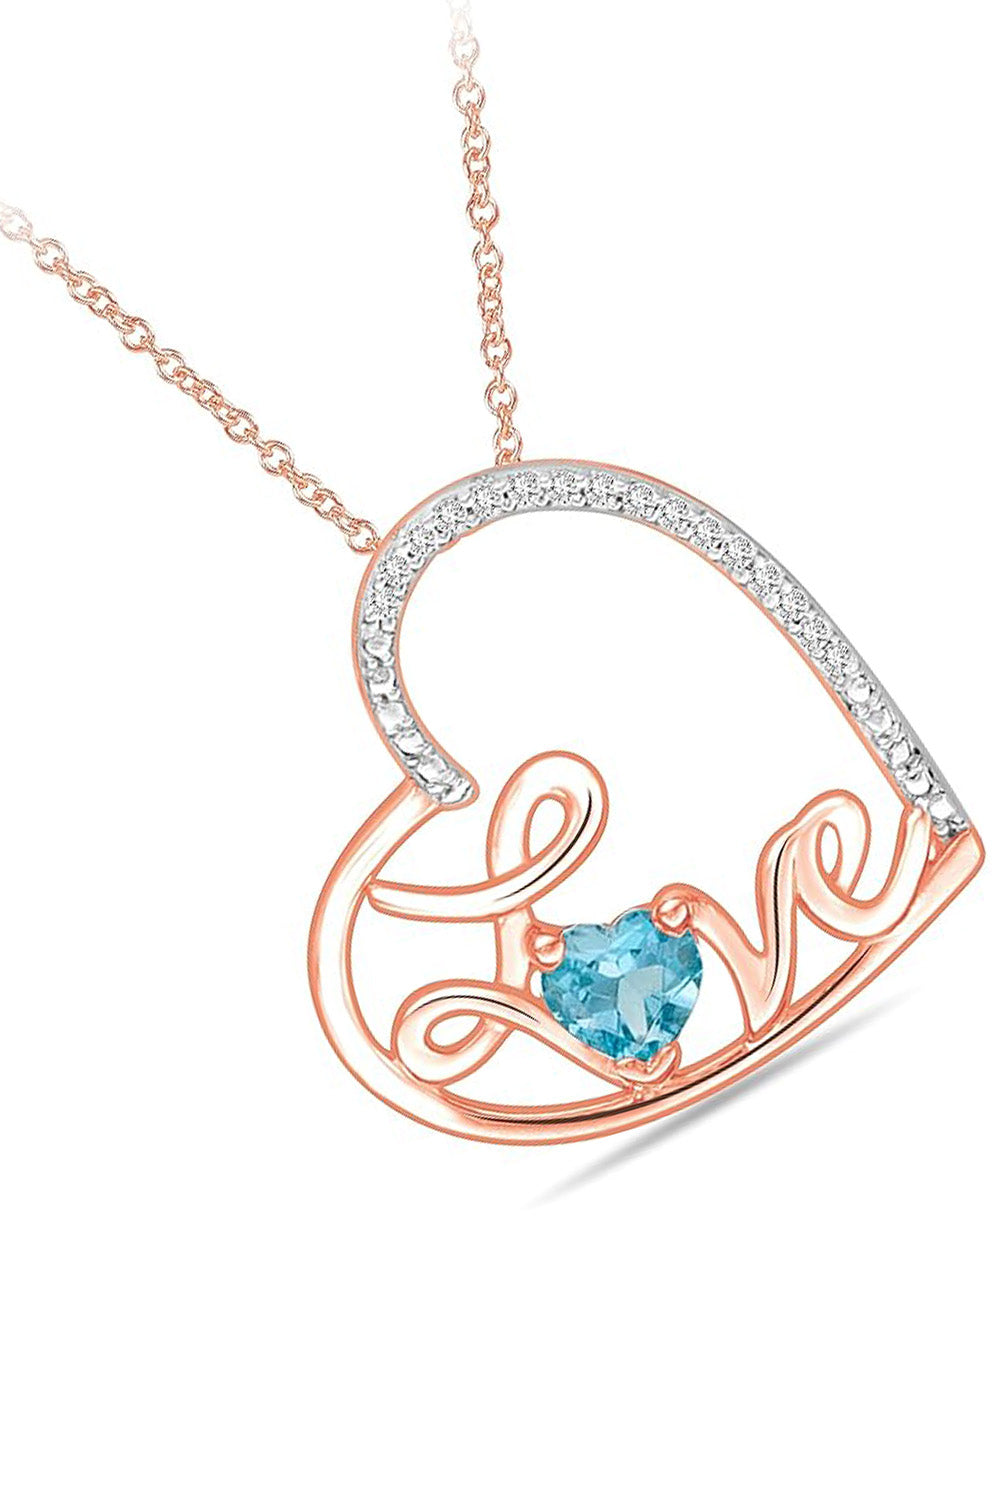 Rose Gold Color Blue Topaz Gemstone Love Heart Pendant Necklace